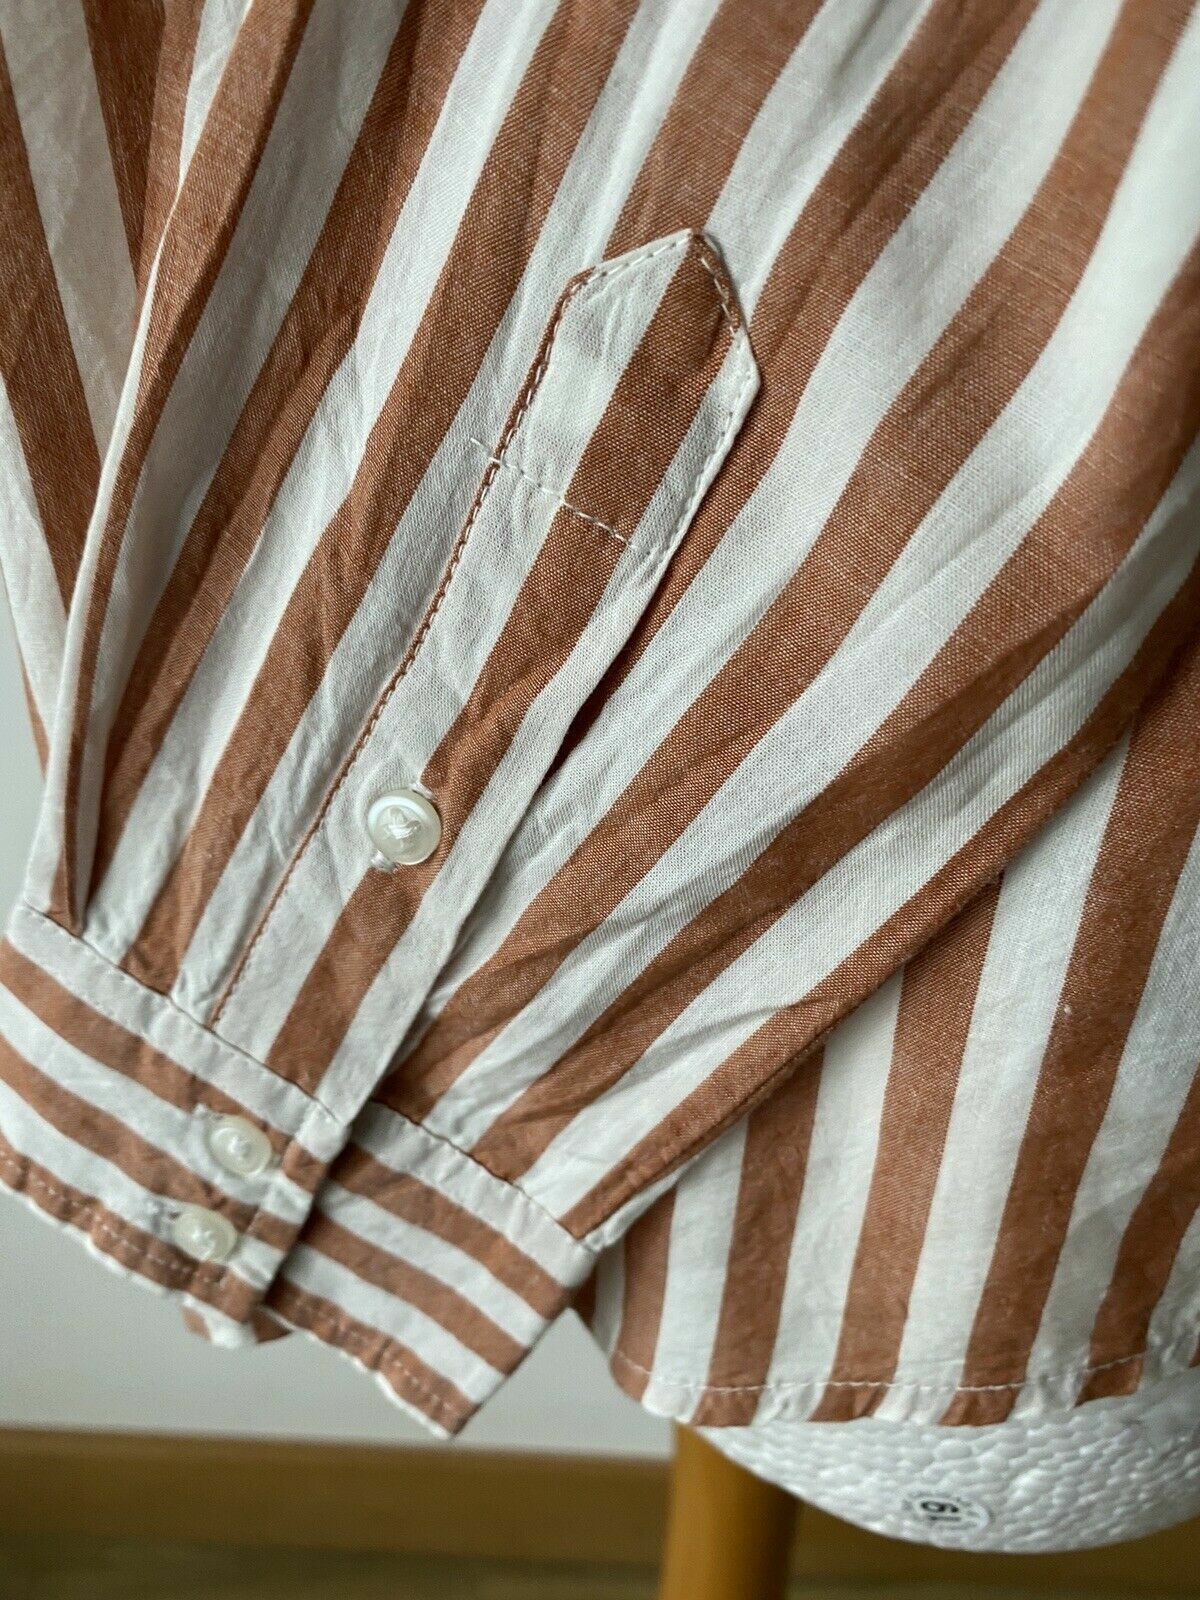 ICHI Striped Cotton Lightweight Shirt Size 6 / 34 Pit to Pit 18"